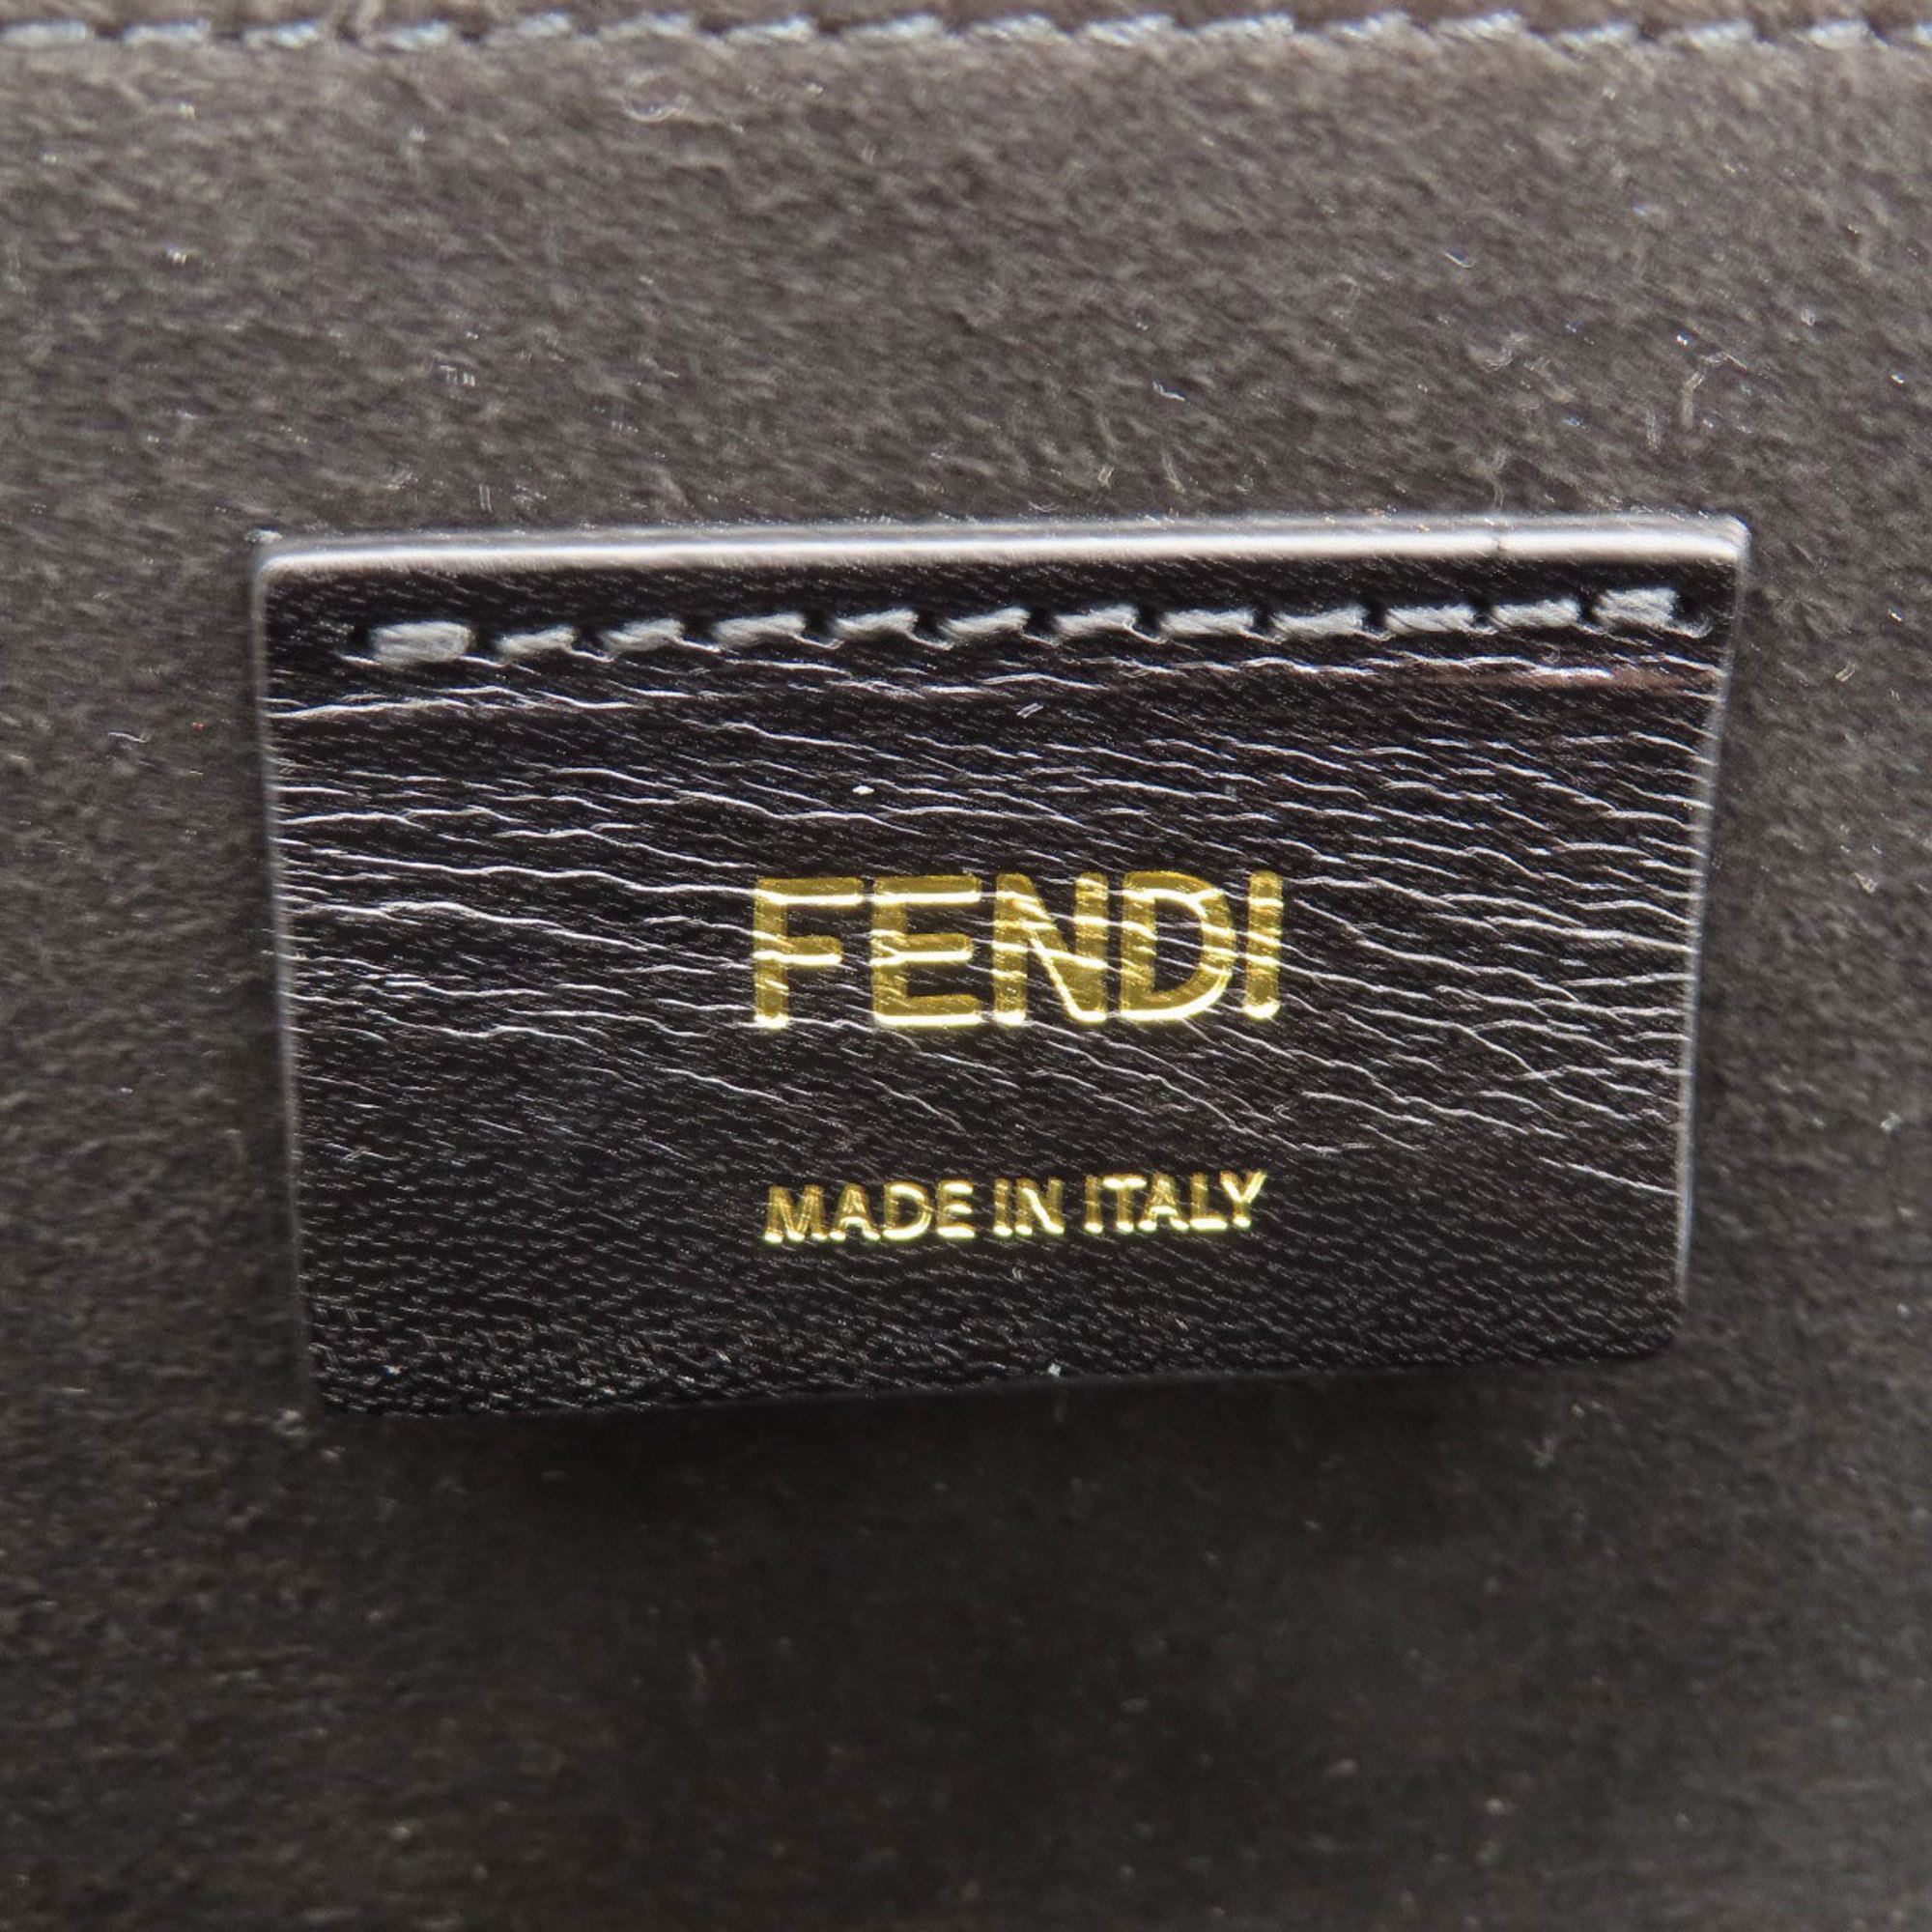 Fendi Box Shoulder Bag Calfskin Women's